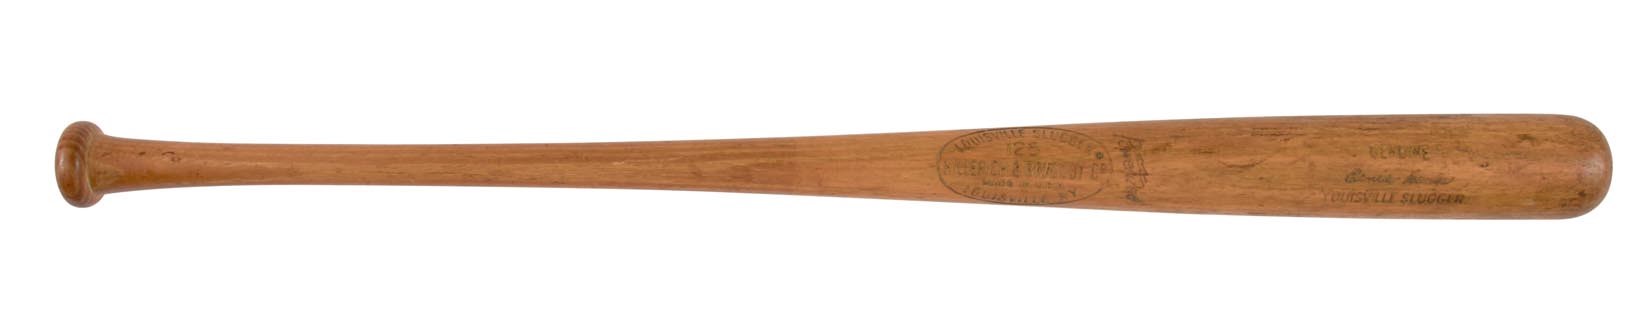 1965-68 Ernie Banks Game Used Bat